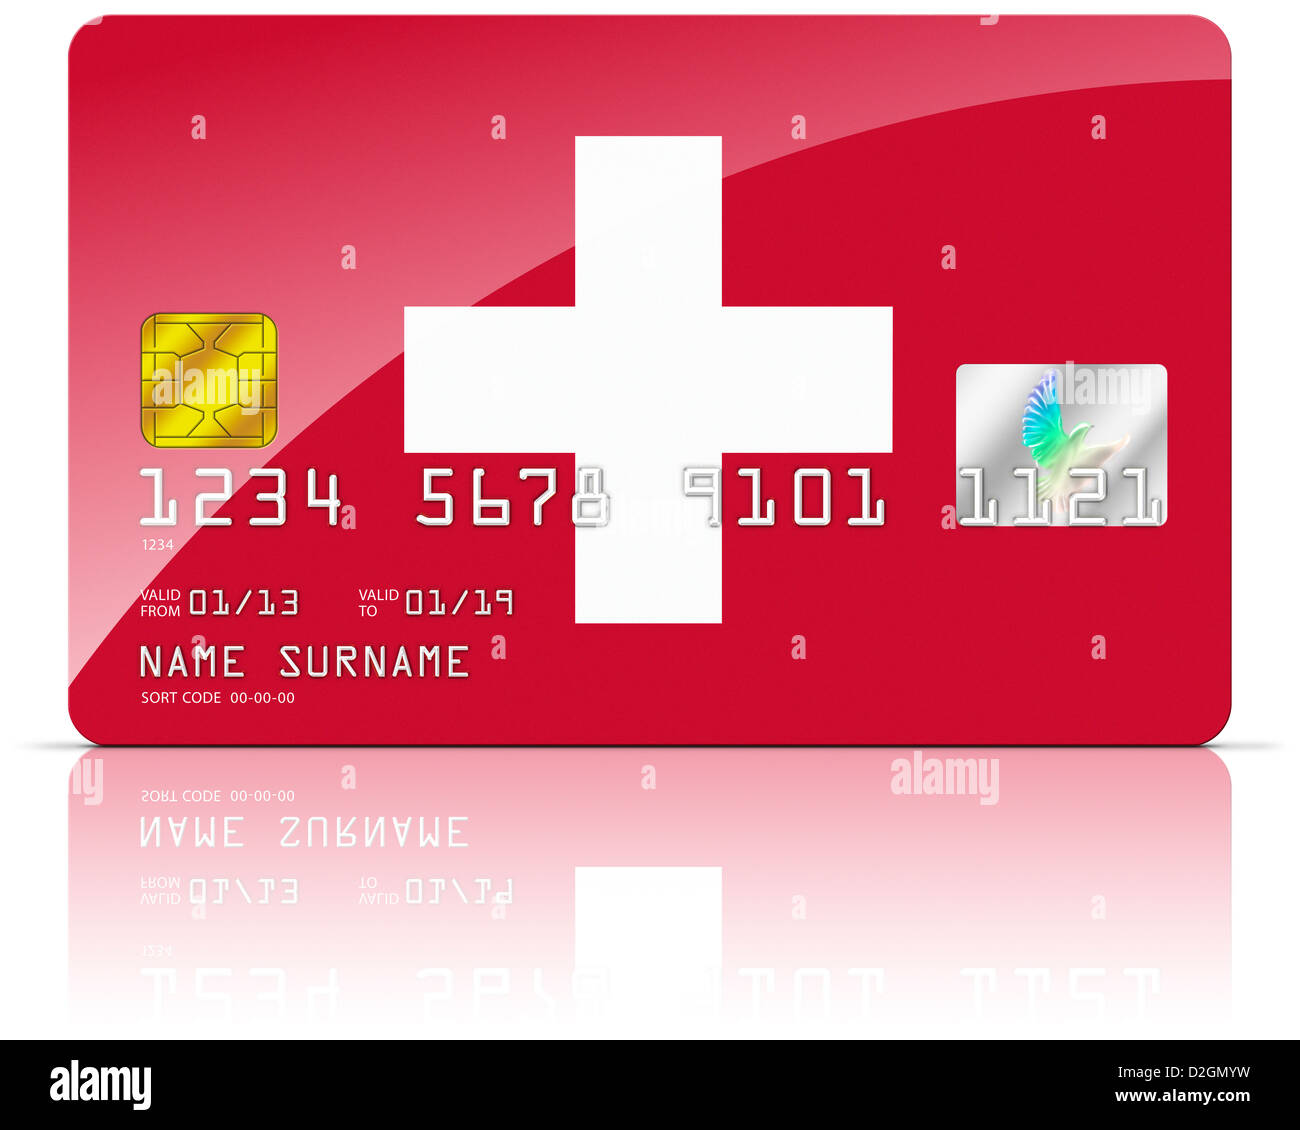 Schweiz-Kreditkarte. Clipping-Pfad enthalten Stockfotografie - Alamy